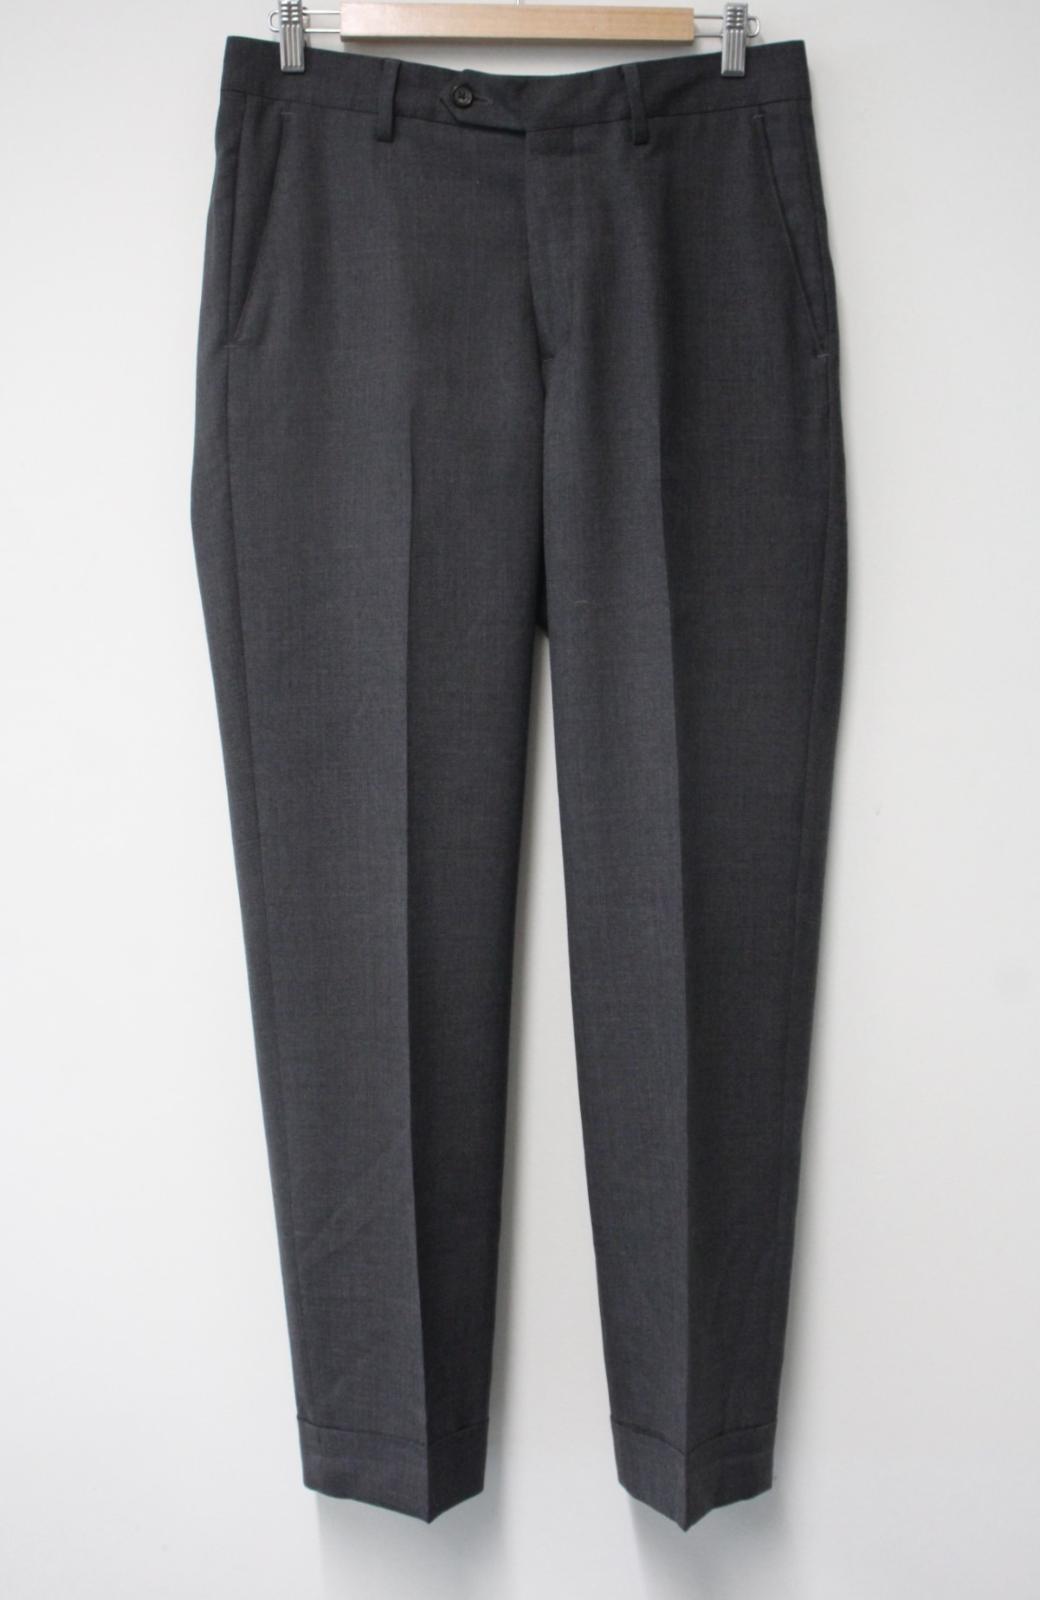 BERLE Men's Charcoal Grey Front Pleat Straight Leg Trousers Size W32 L30